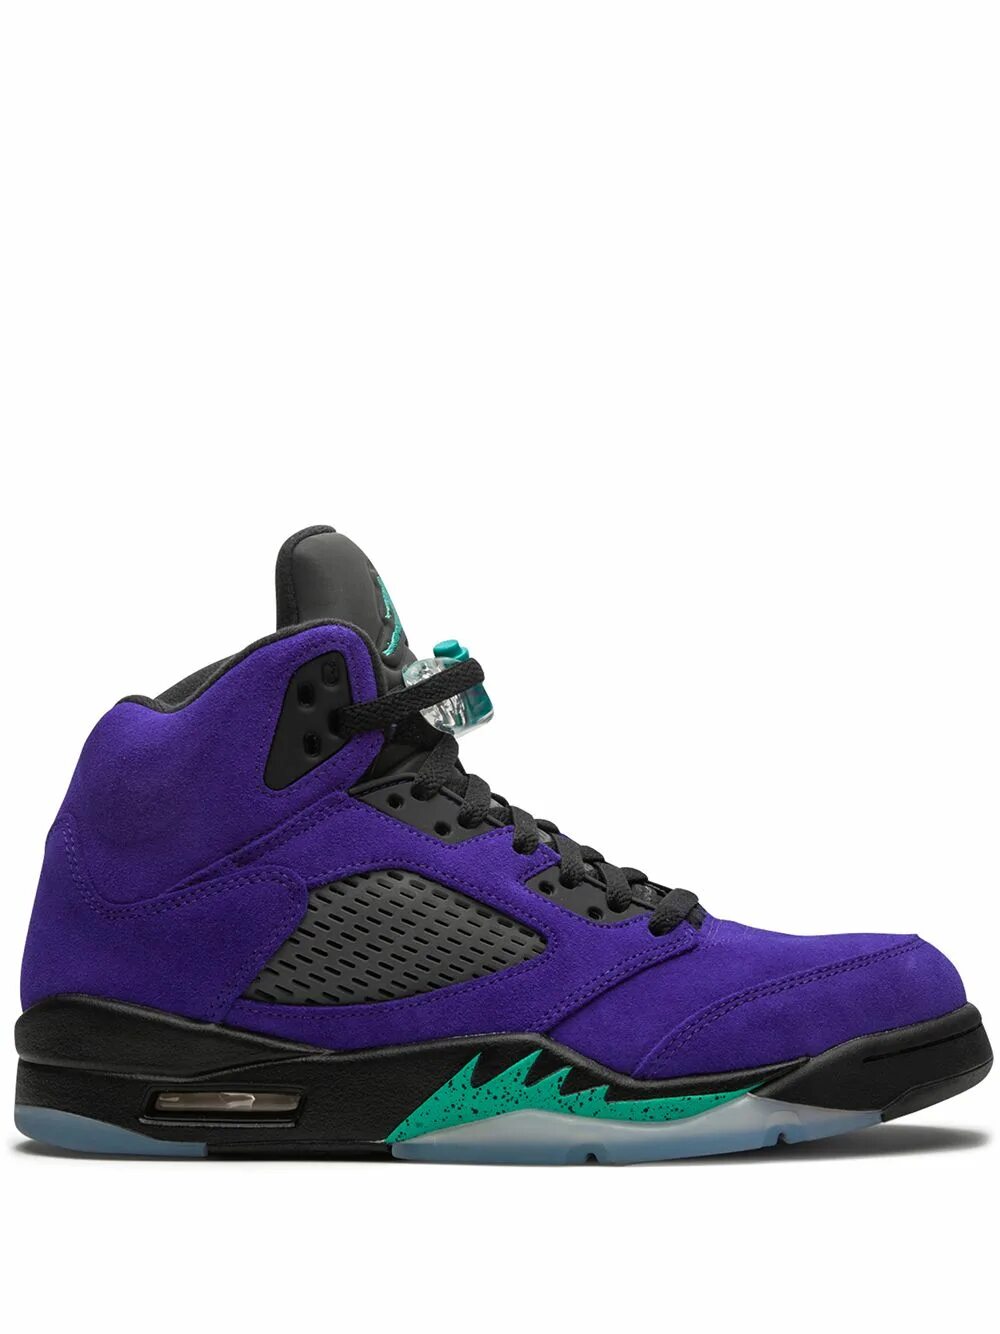 Nike Air Jordan 5 Retro grape. Nike Air Jordan 5. Nike Air Jordan 5 Retro Alternate grape. Найк Jordan 5 Retro Alternate grape фиолетовые. Purple air купить